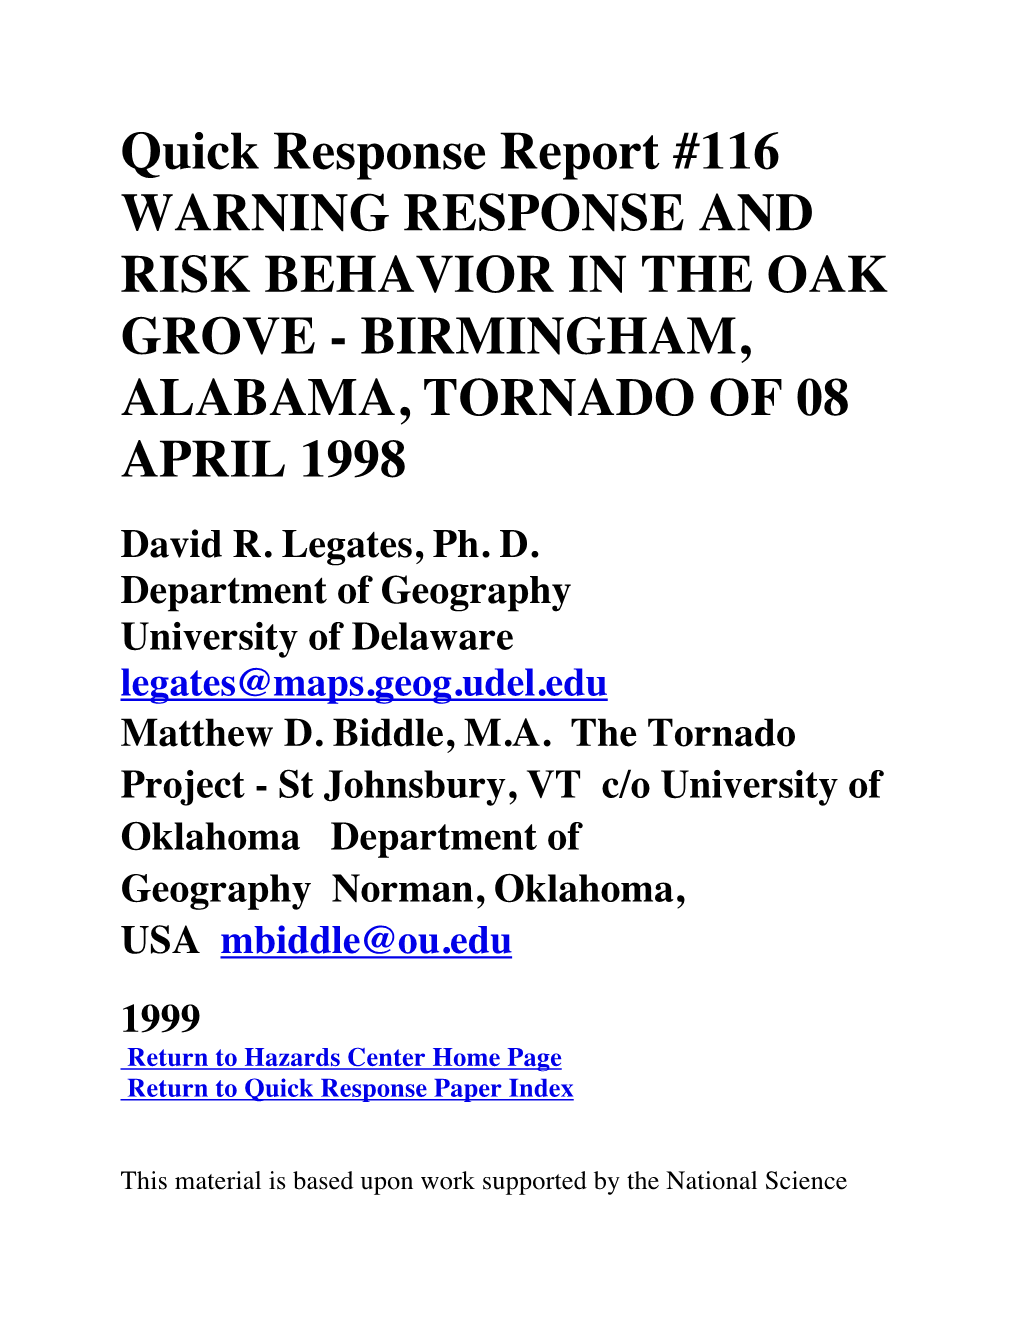 Birmingham, Alabama, Tornado of 08 April 1998